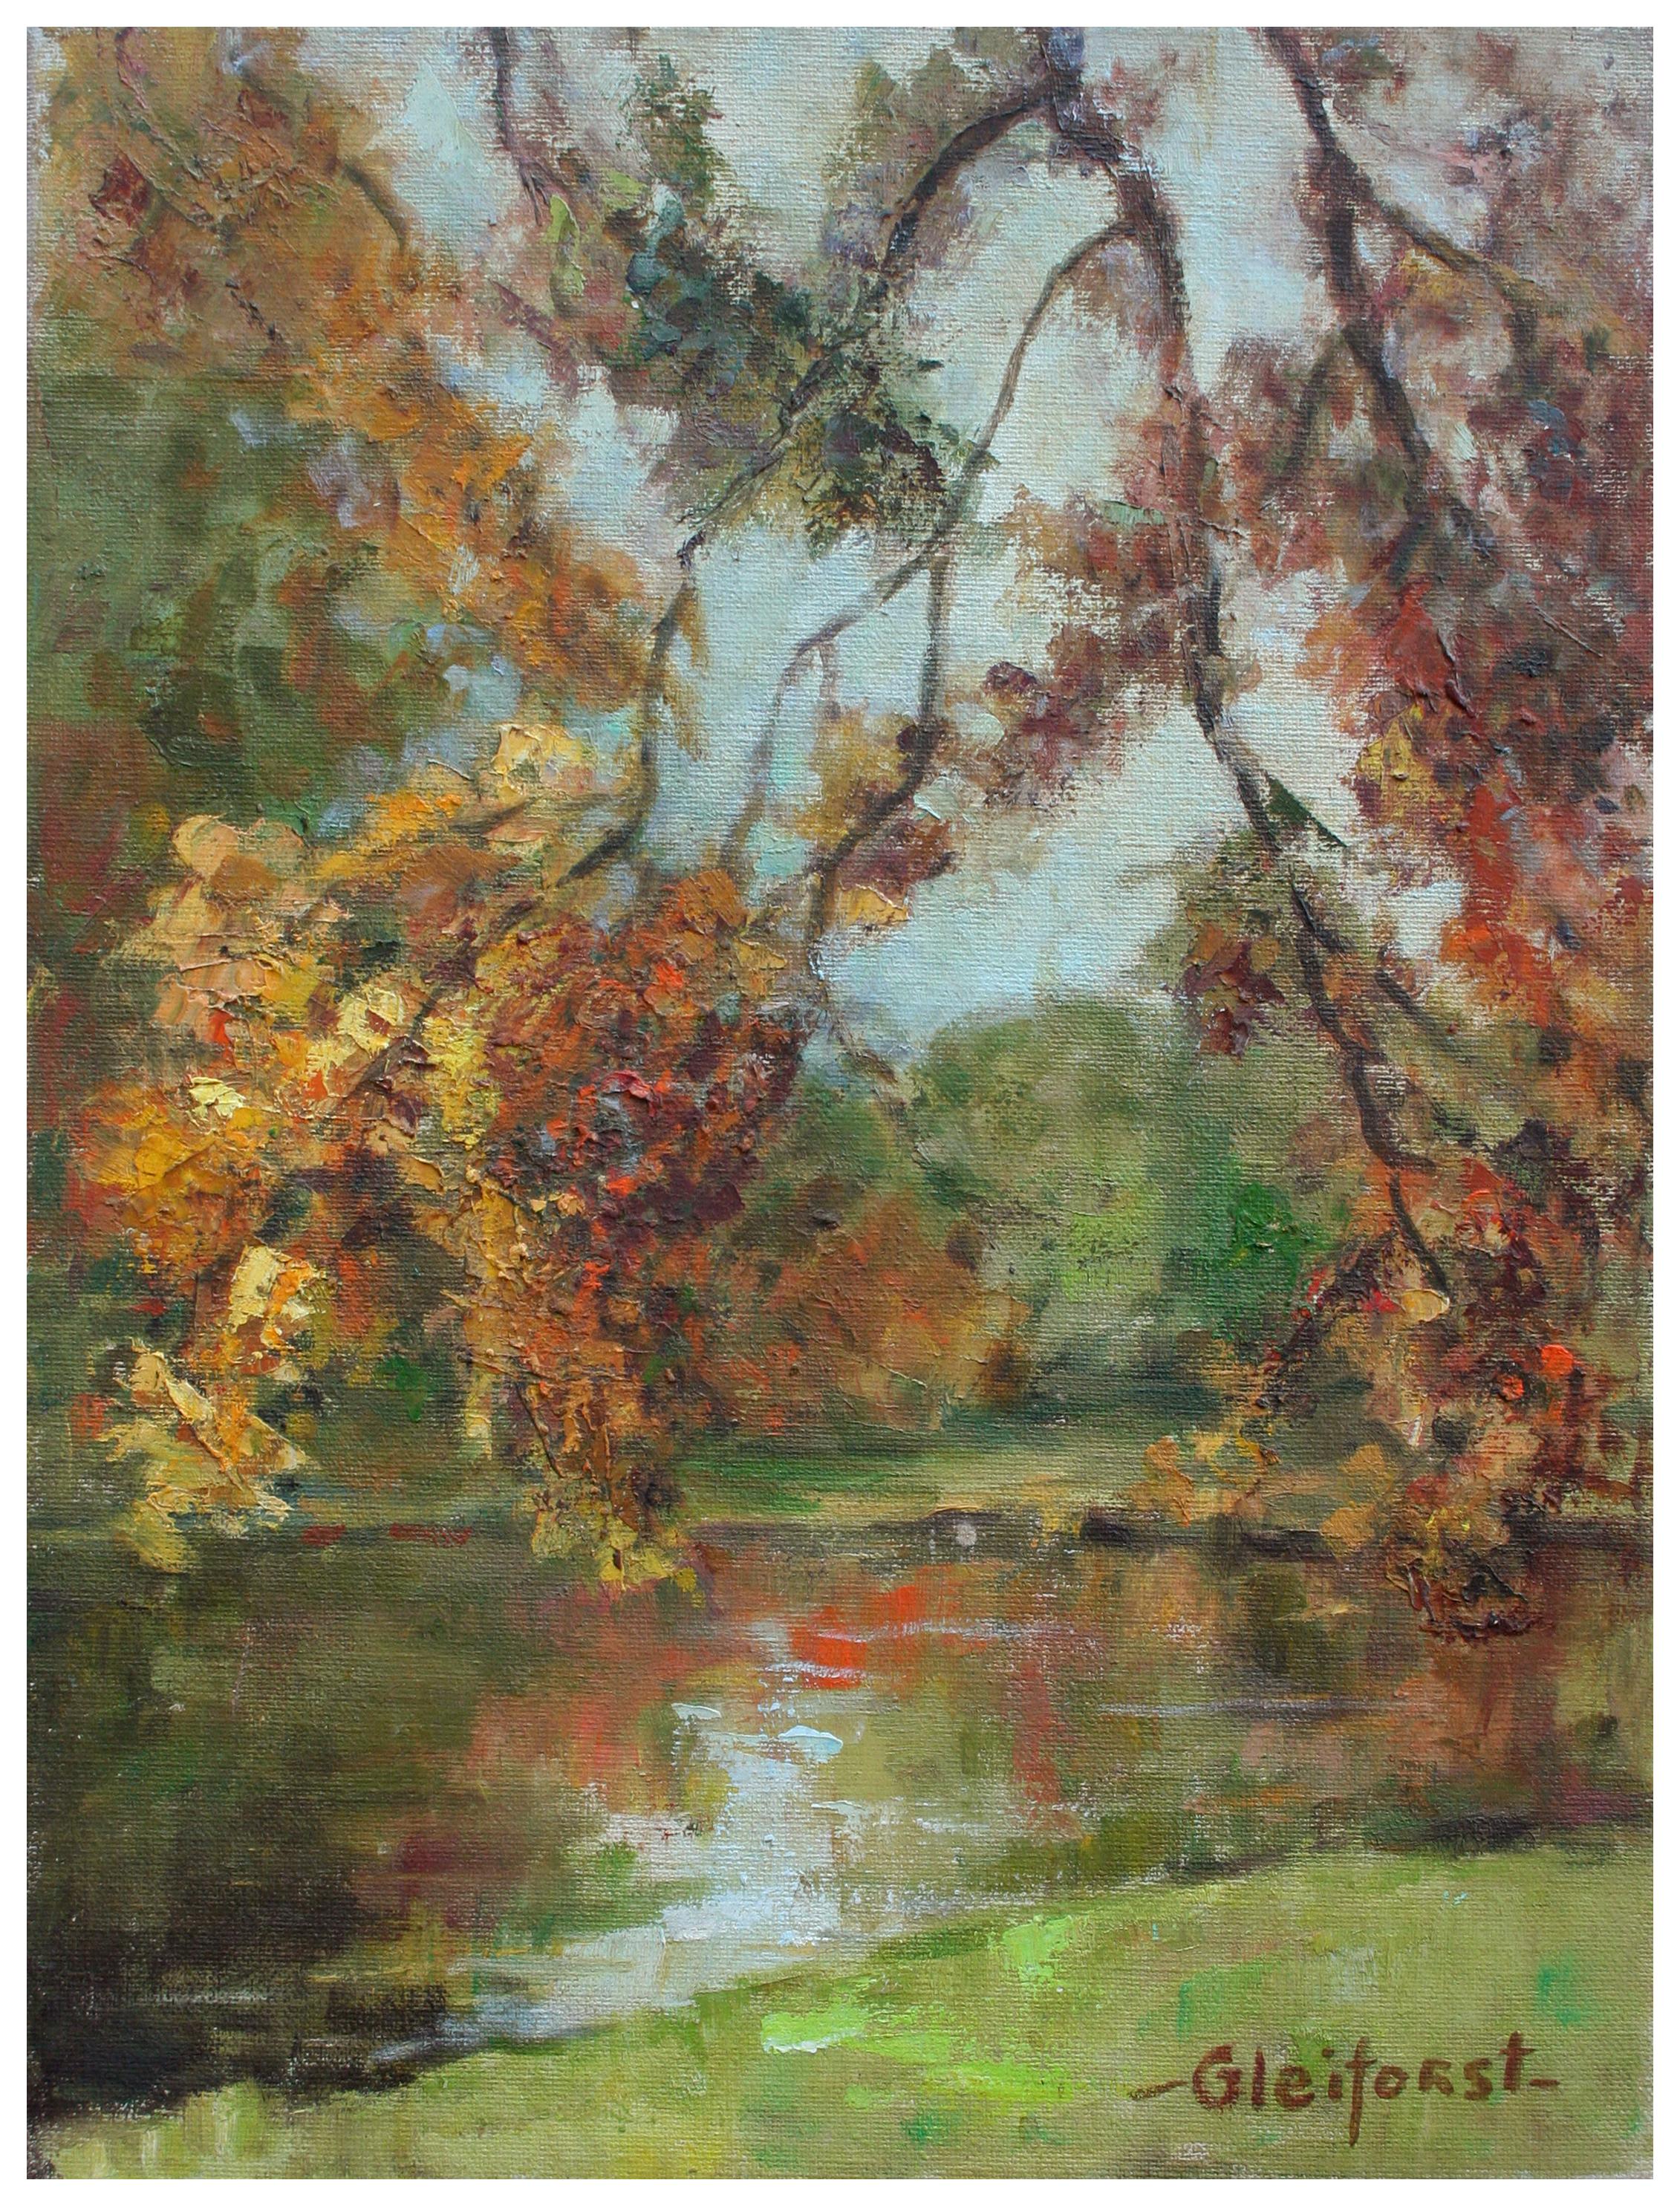 Helen Enoch Gleiforst Landscape Painting - Mid Century Autumn Trees Landscape